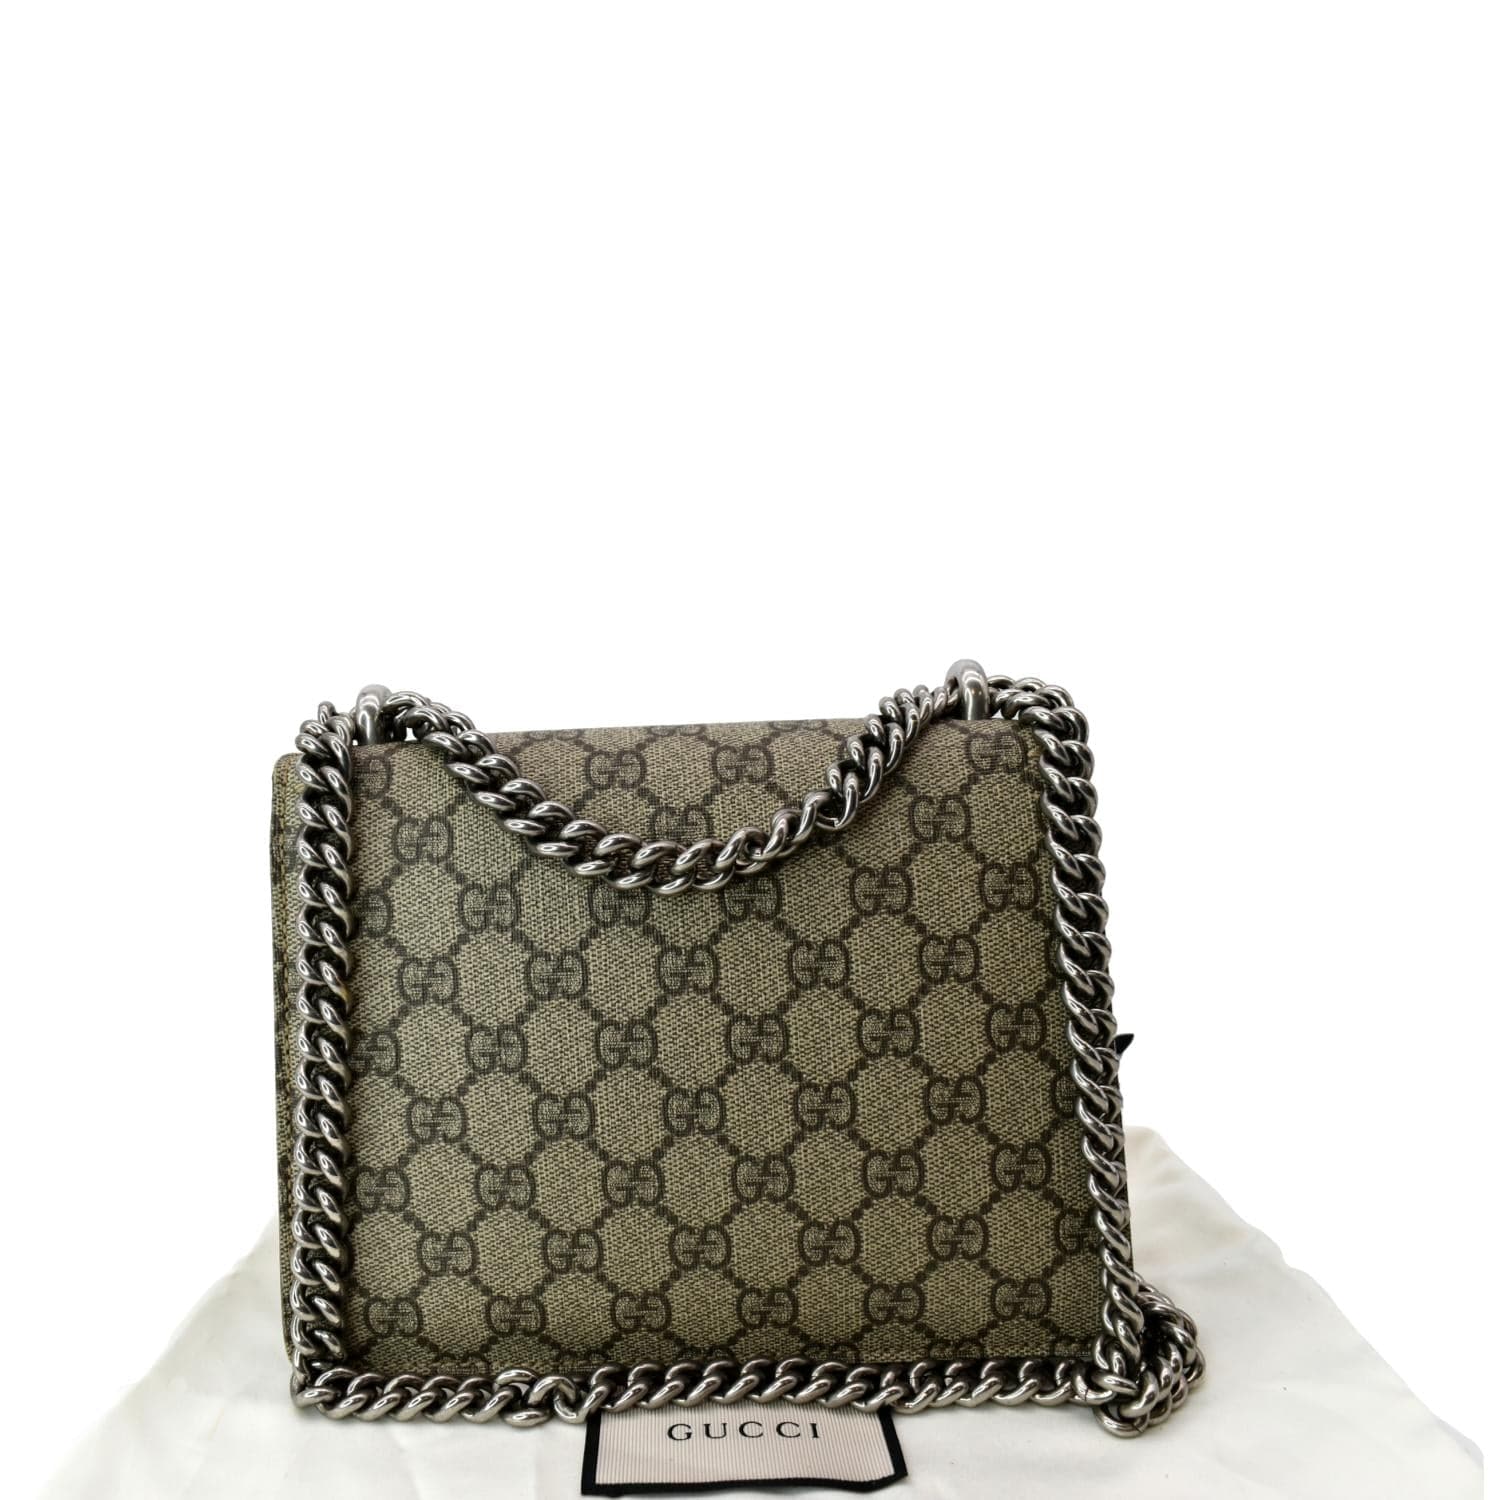 Gucci Dionysus GG Supreme Mini Bag Beige Chain Bag Style ‎421970